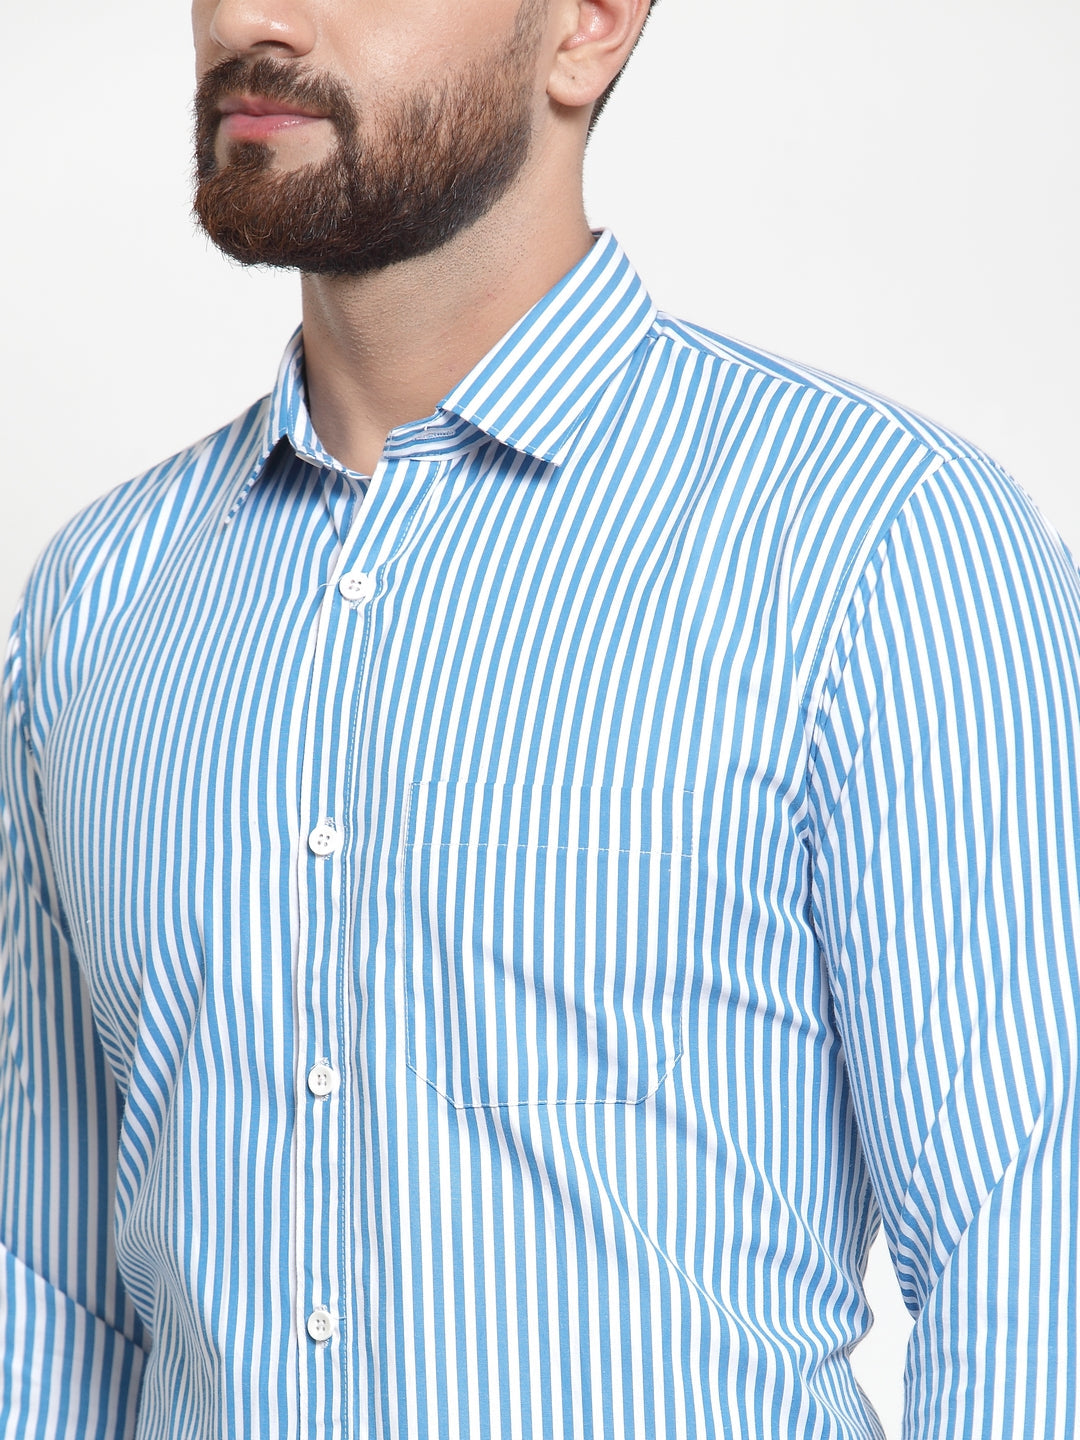 Men's Blue Cotton Striped Formal Shirts ( SF 735Sky ) - Jainish